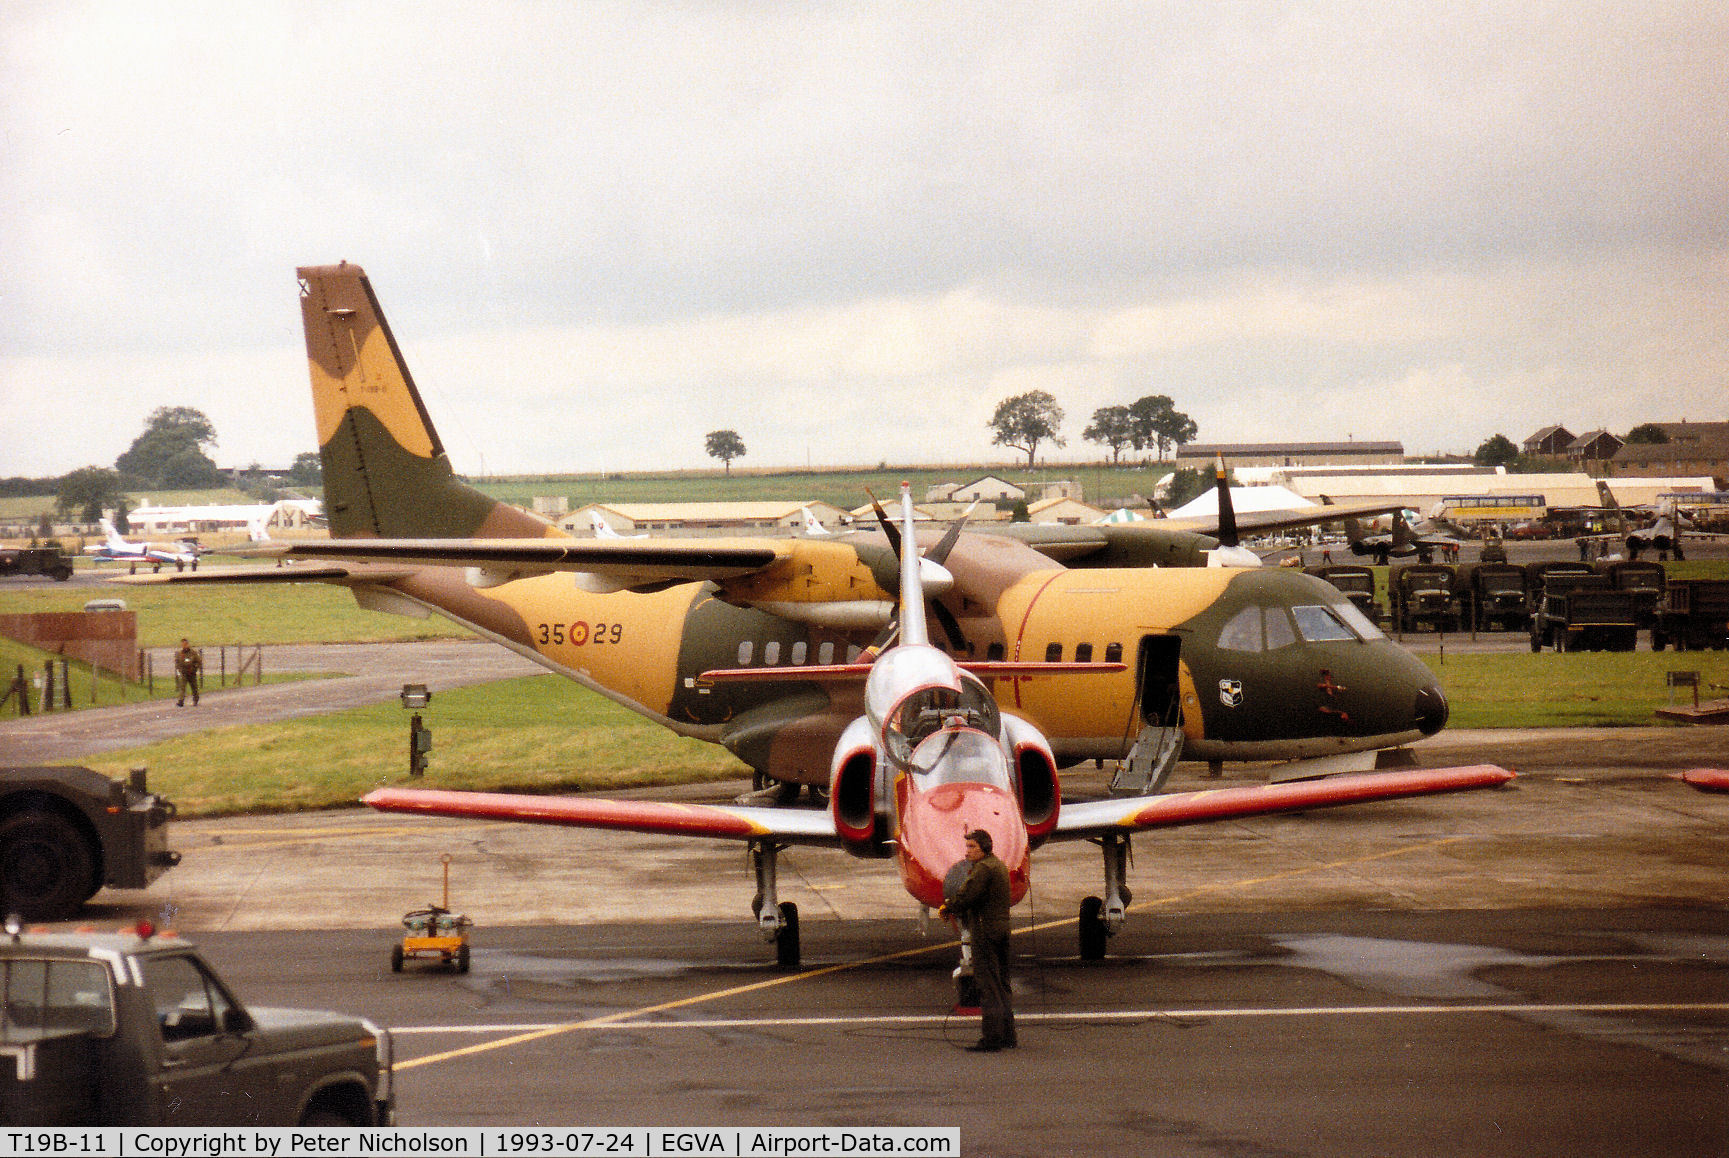 T19B-11, 1991 Airtech CN-235-100M C/N C047, CASA CN-235 support aircraft, of Ala 35, for the Spanish Air Force's Team Aguila display team at the 1993 Intnl Air Tattoo at RAF Fairford.